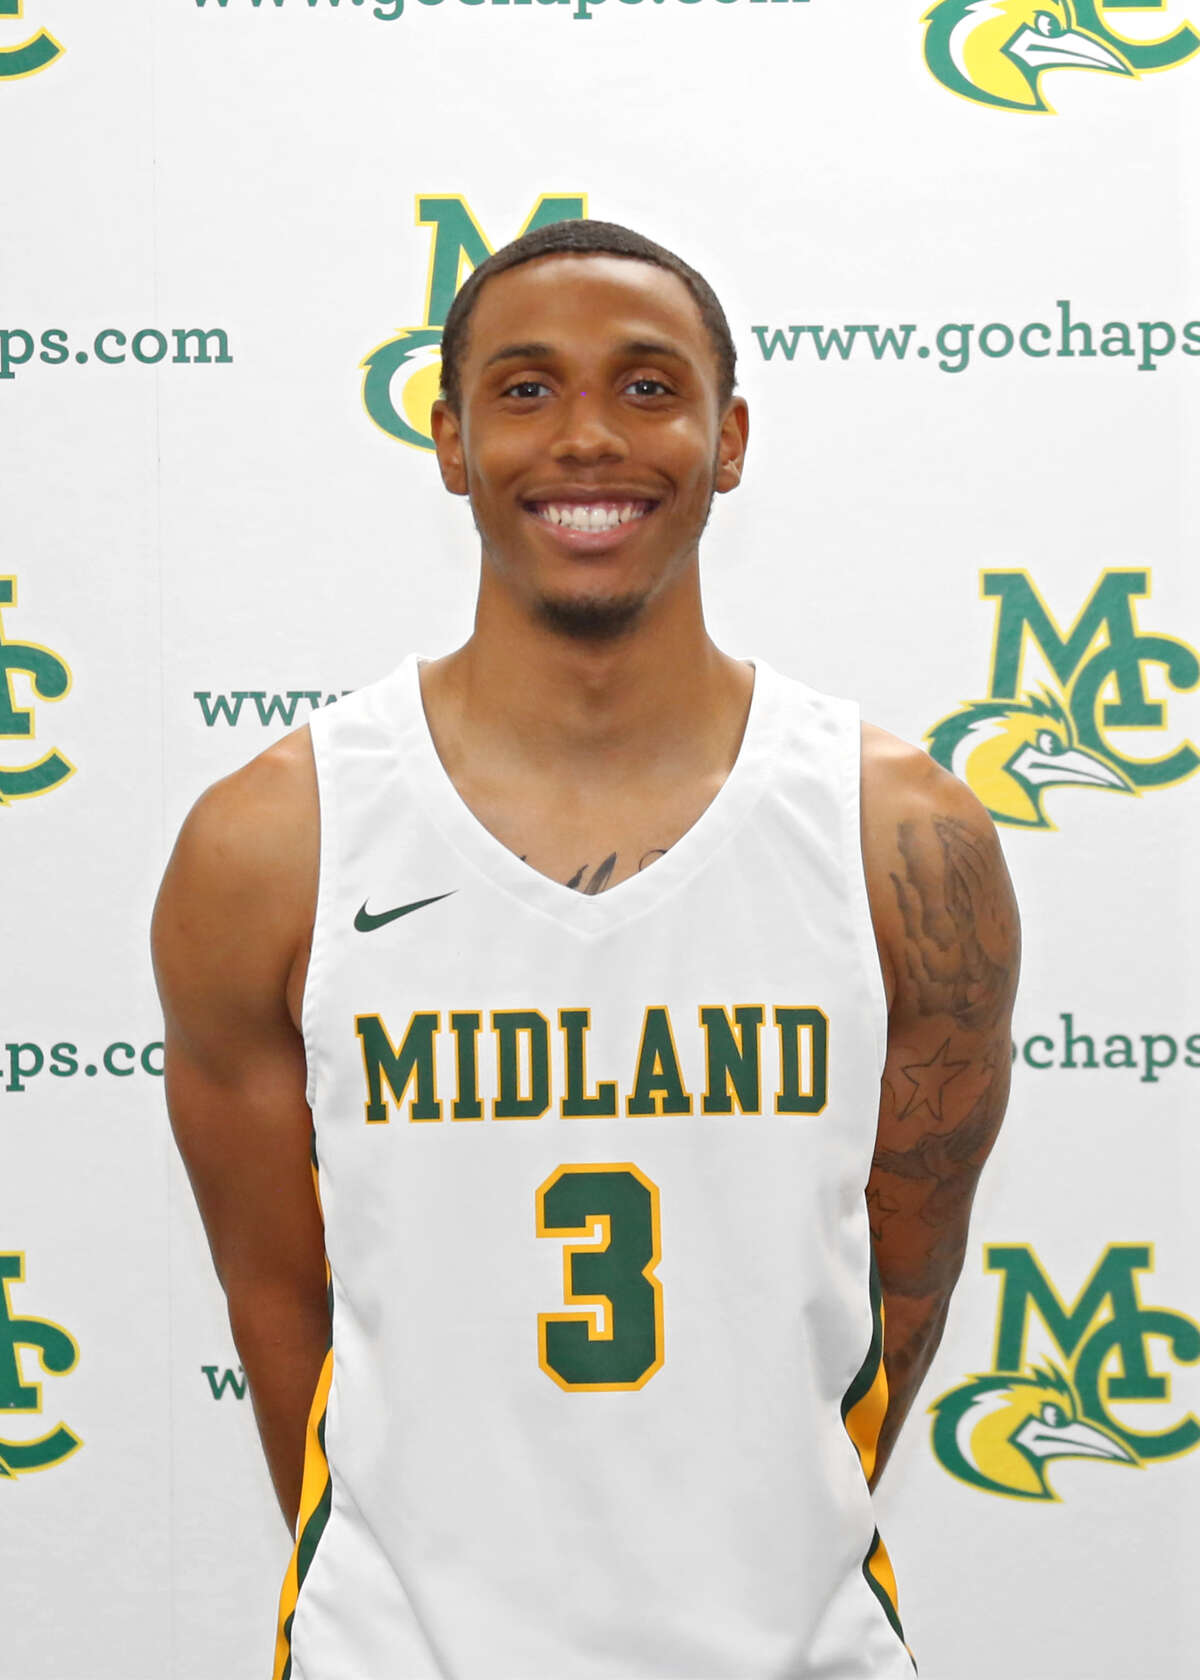 Midland College men's basketball player Thomas Miles